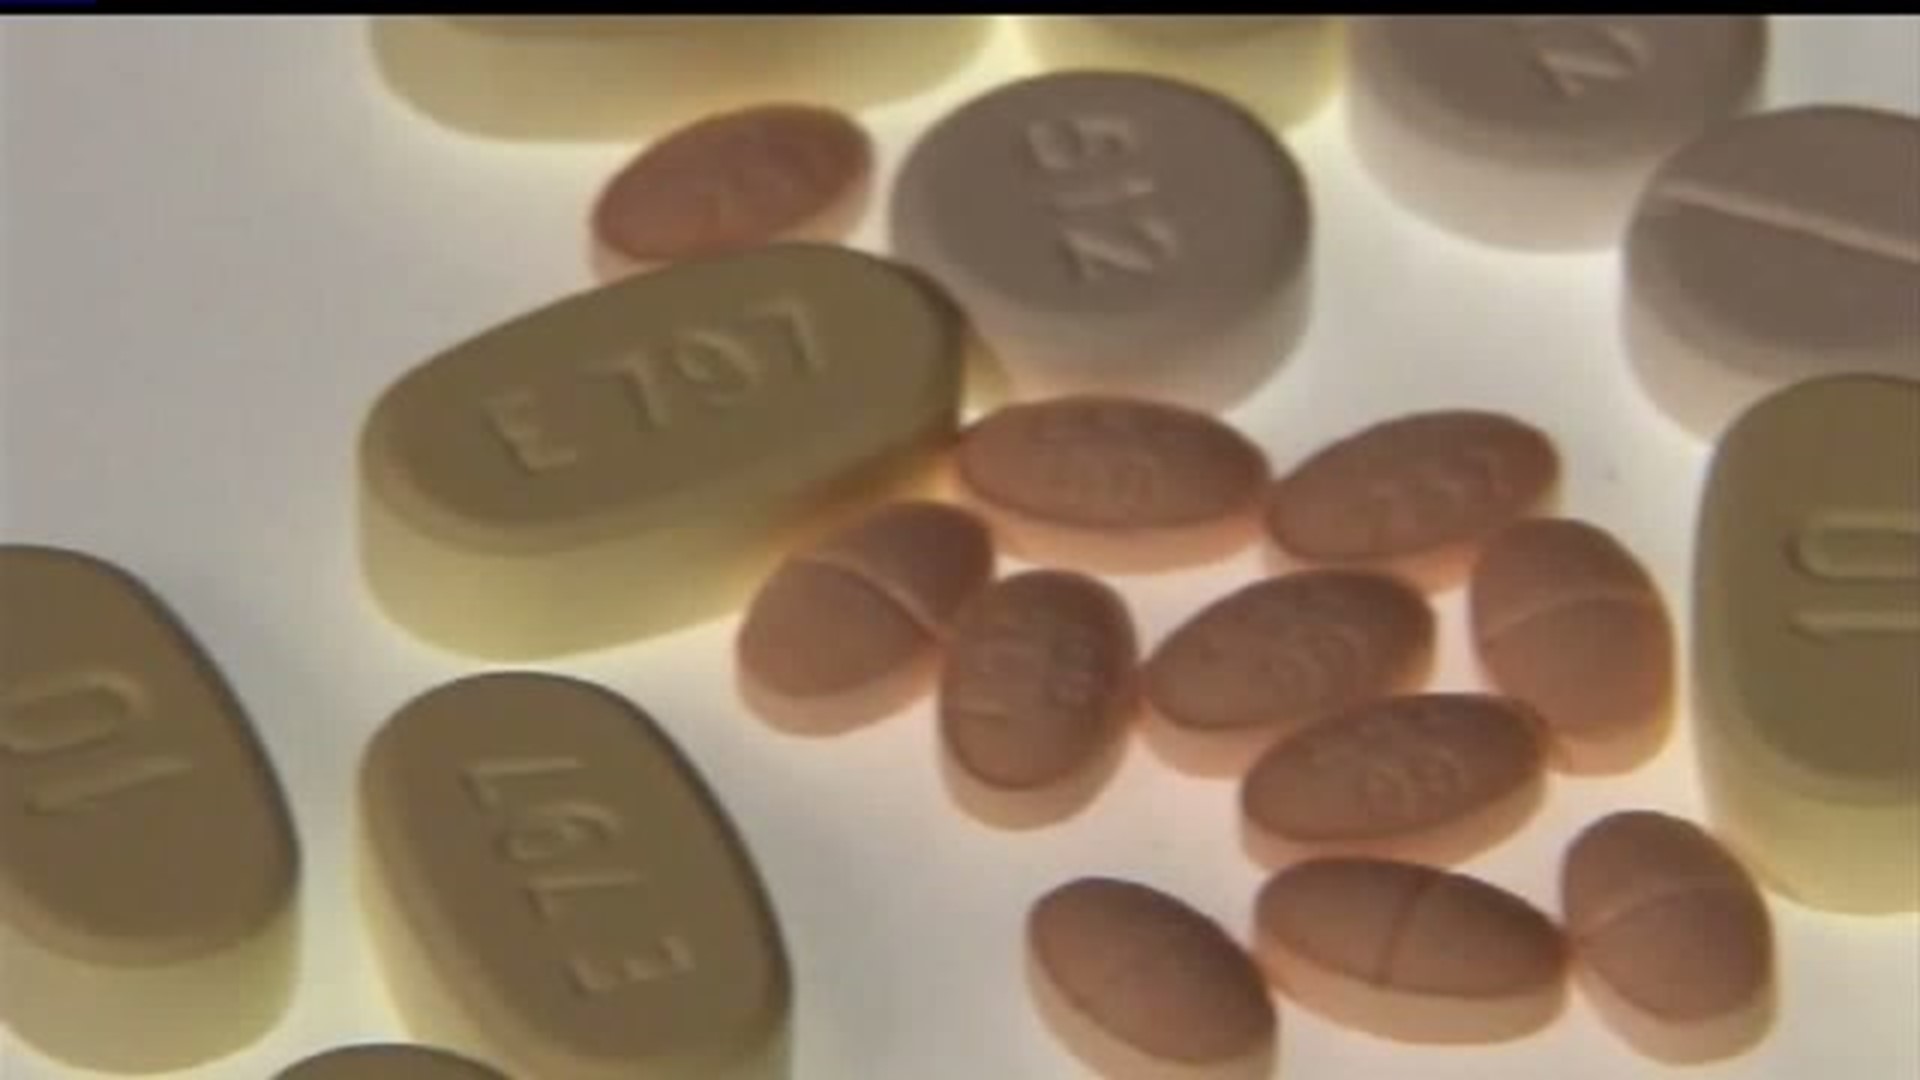 State lawmakers unveil six bills to combat Opioid crisis